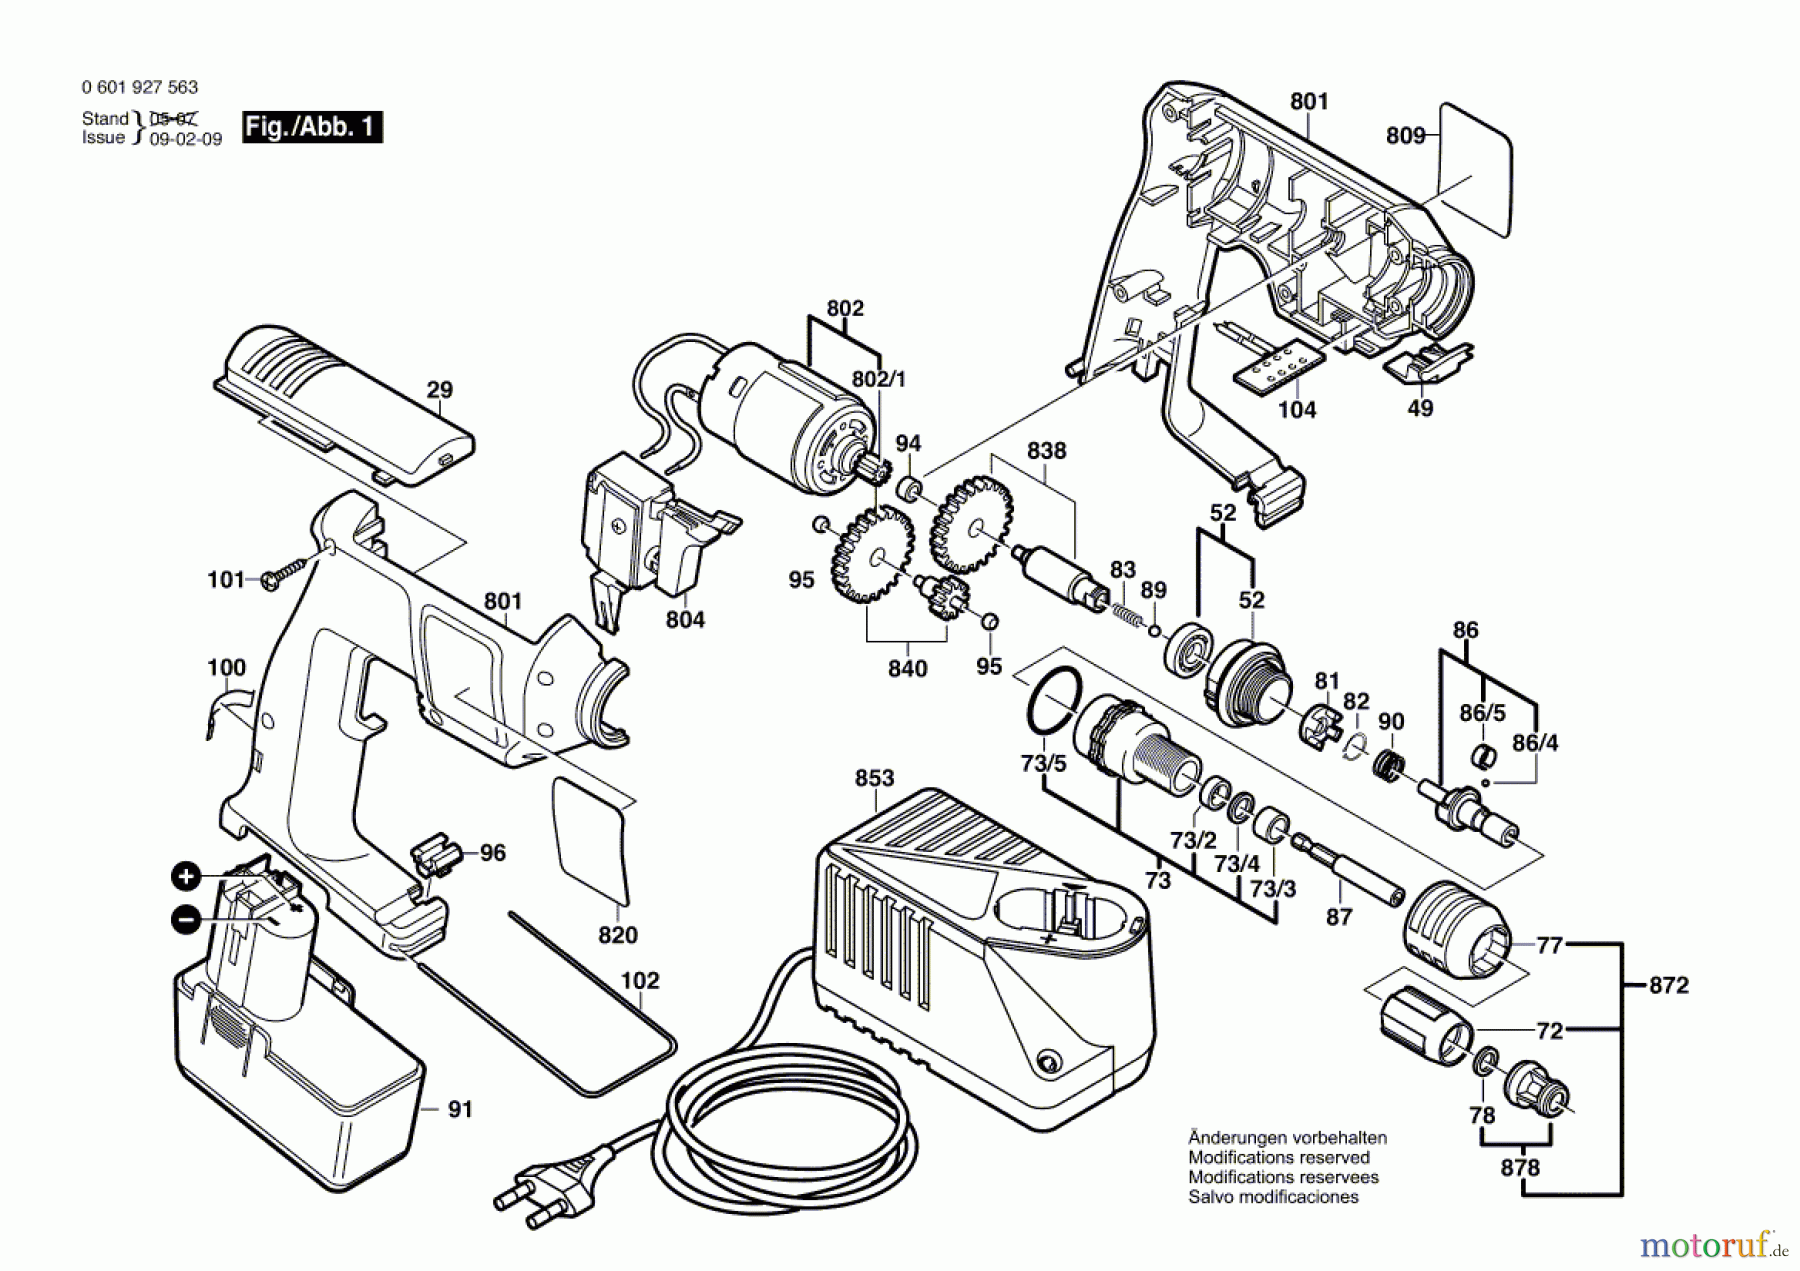  Bosch Akku Werkzeug Akku-Schrauber BACP 12V Seite 1